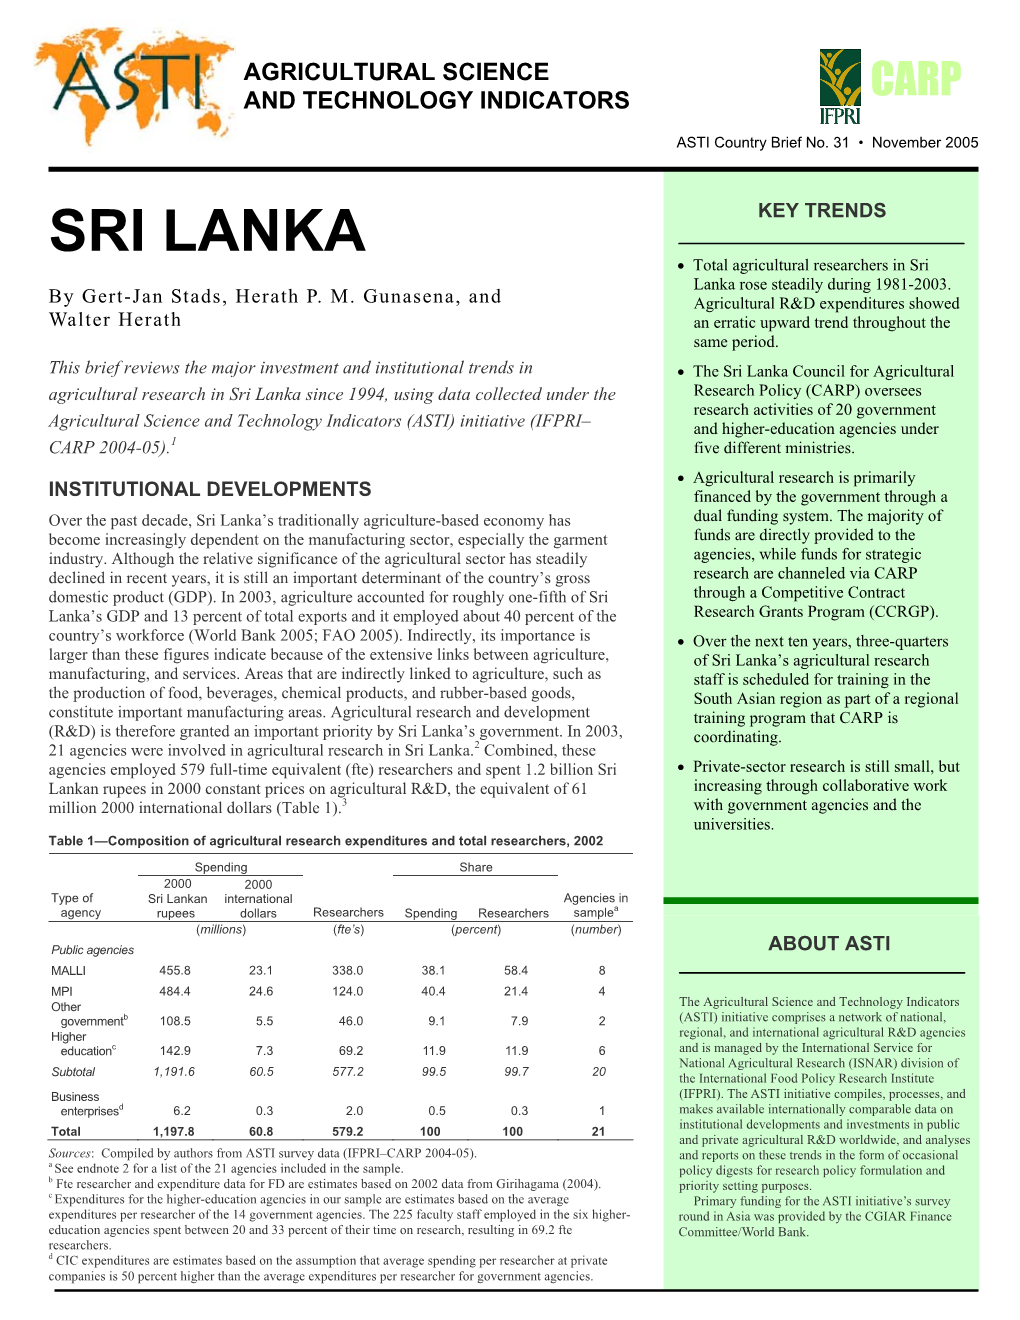 SRI LANKA • Total Agricultural Researchers in Sri Lanka Rose Steadily During 1981-2003